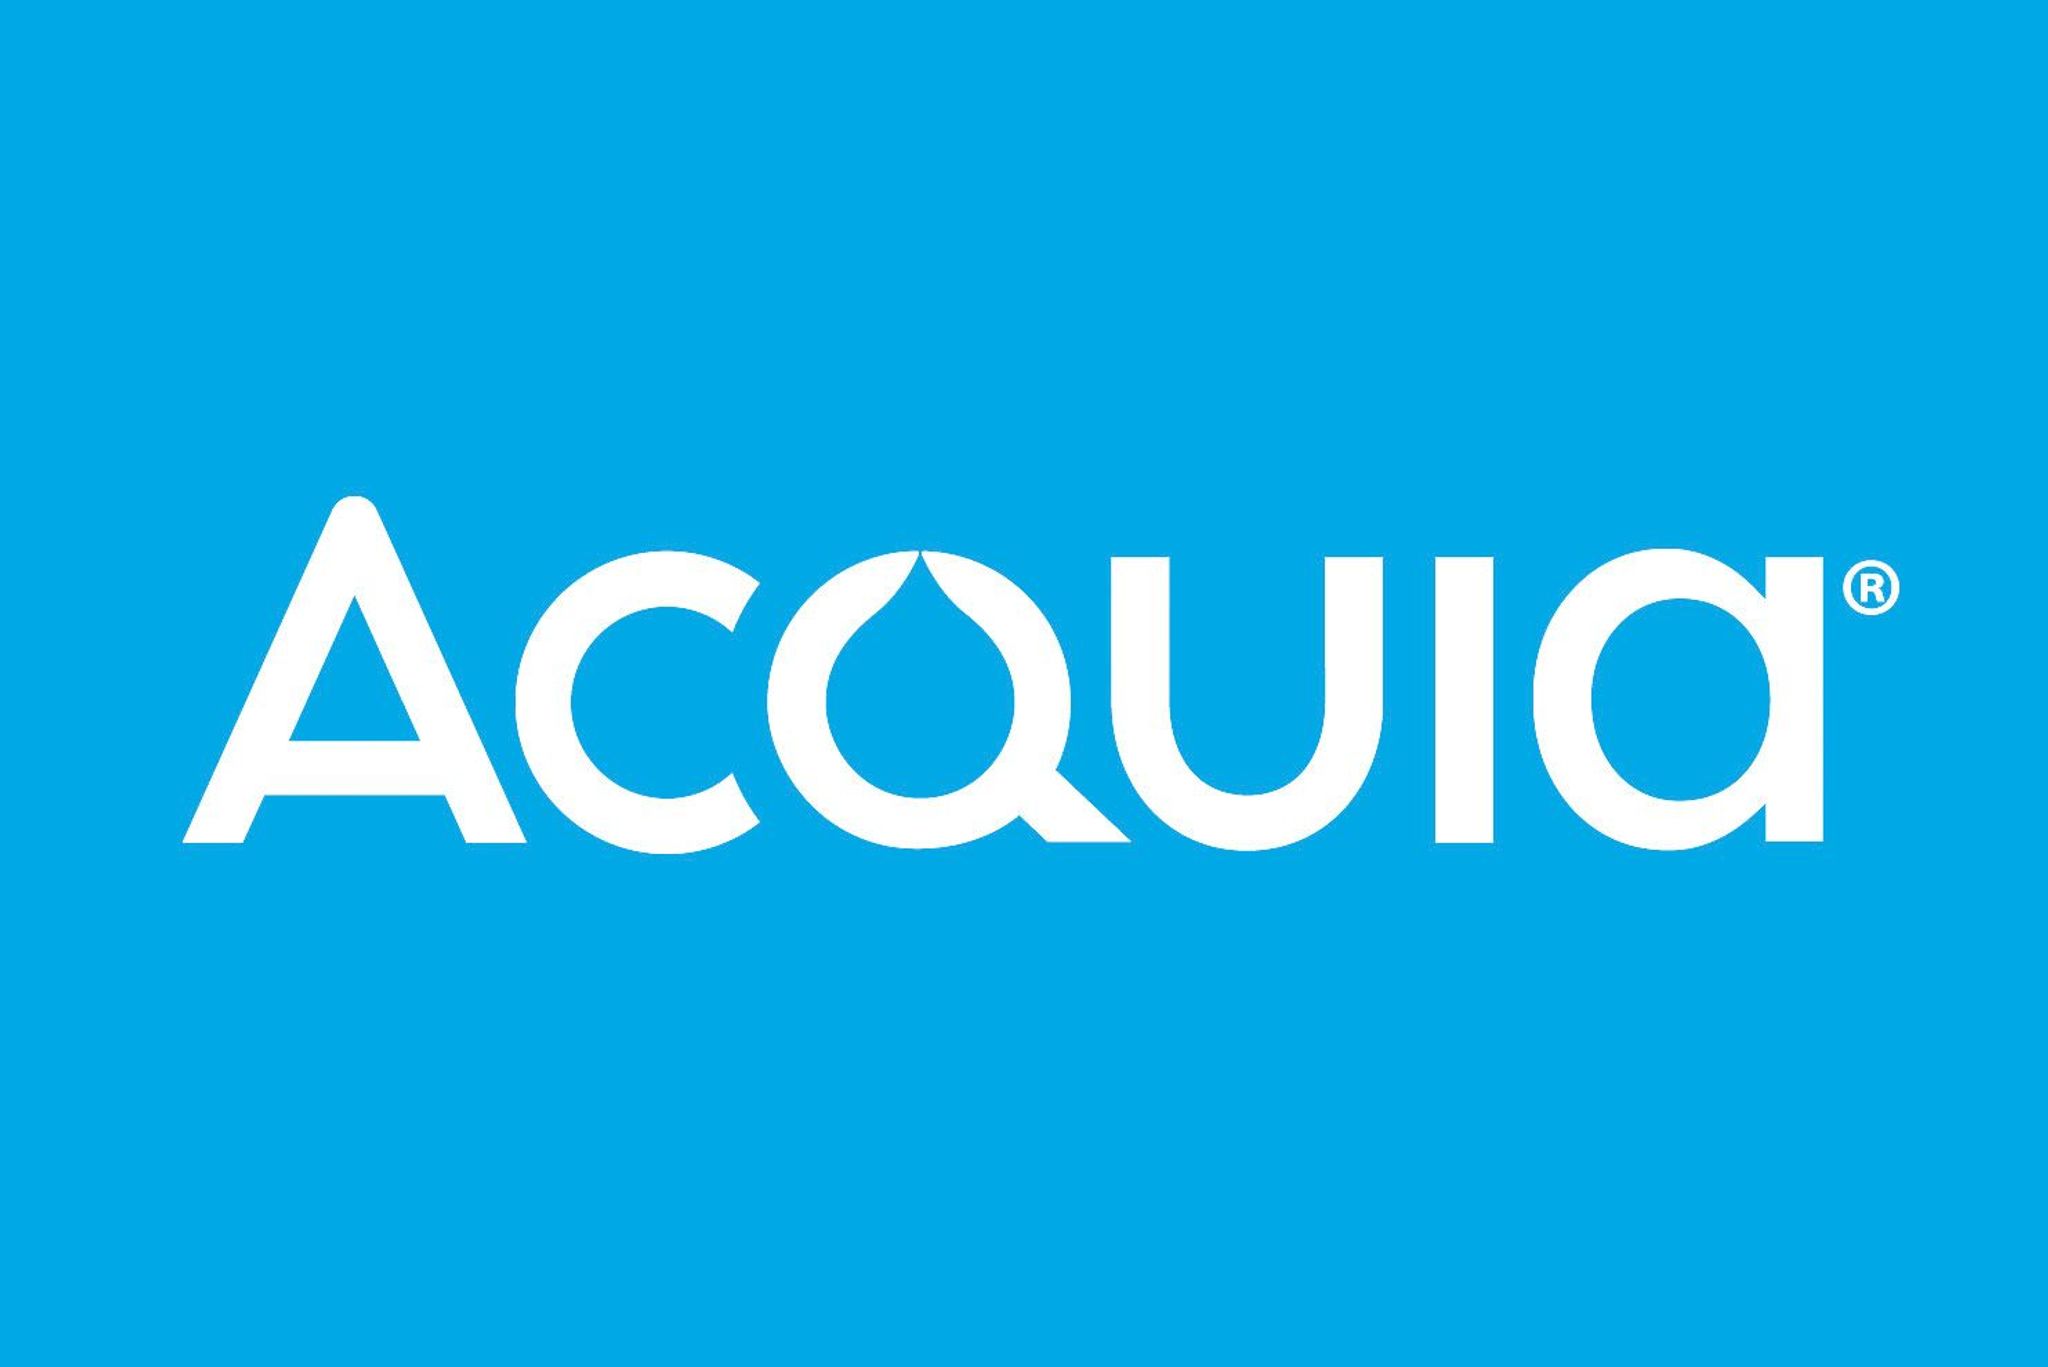 Acquia Company Logo